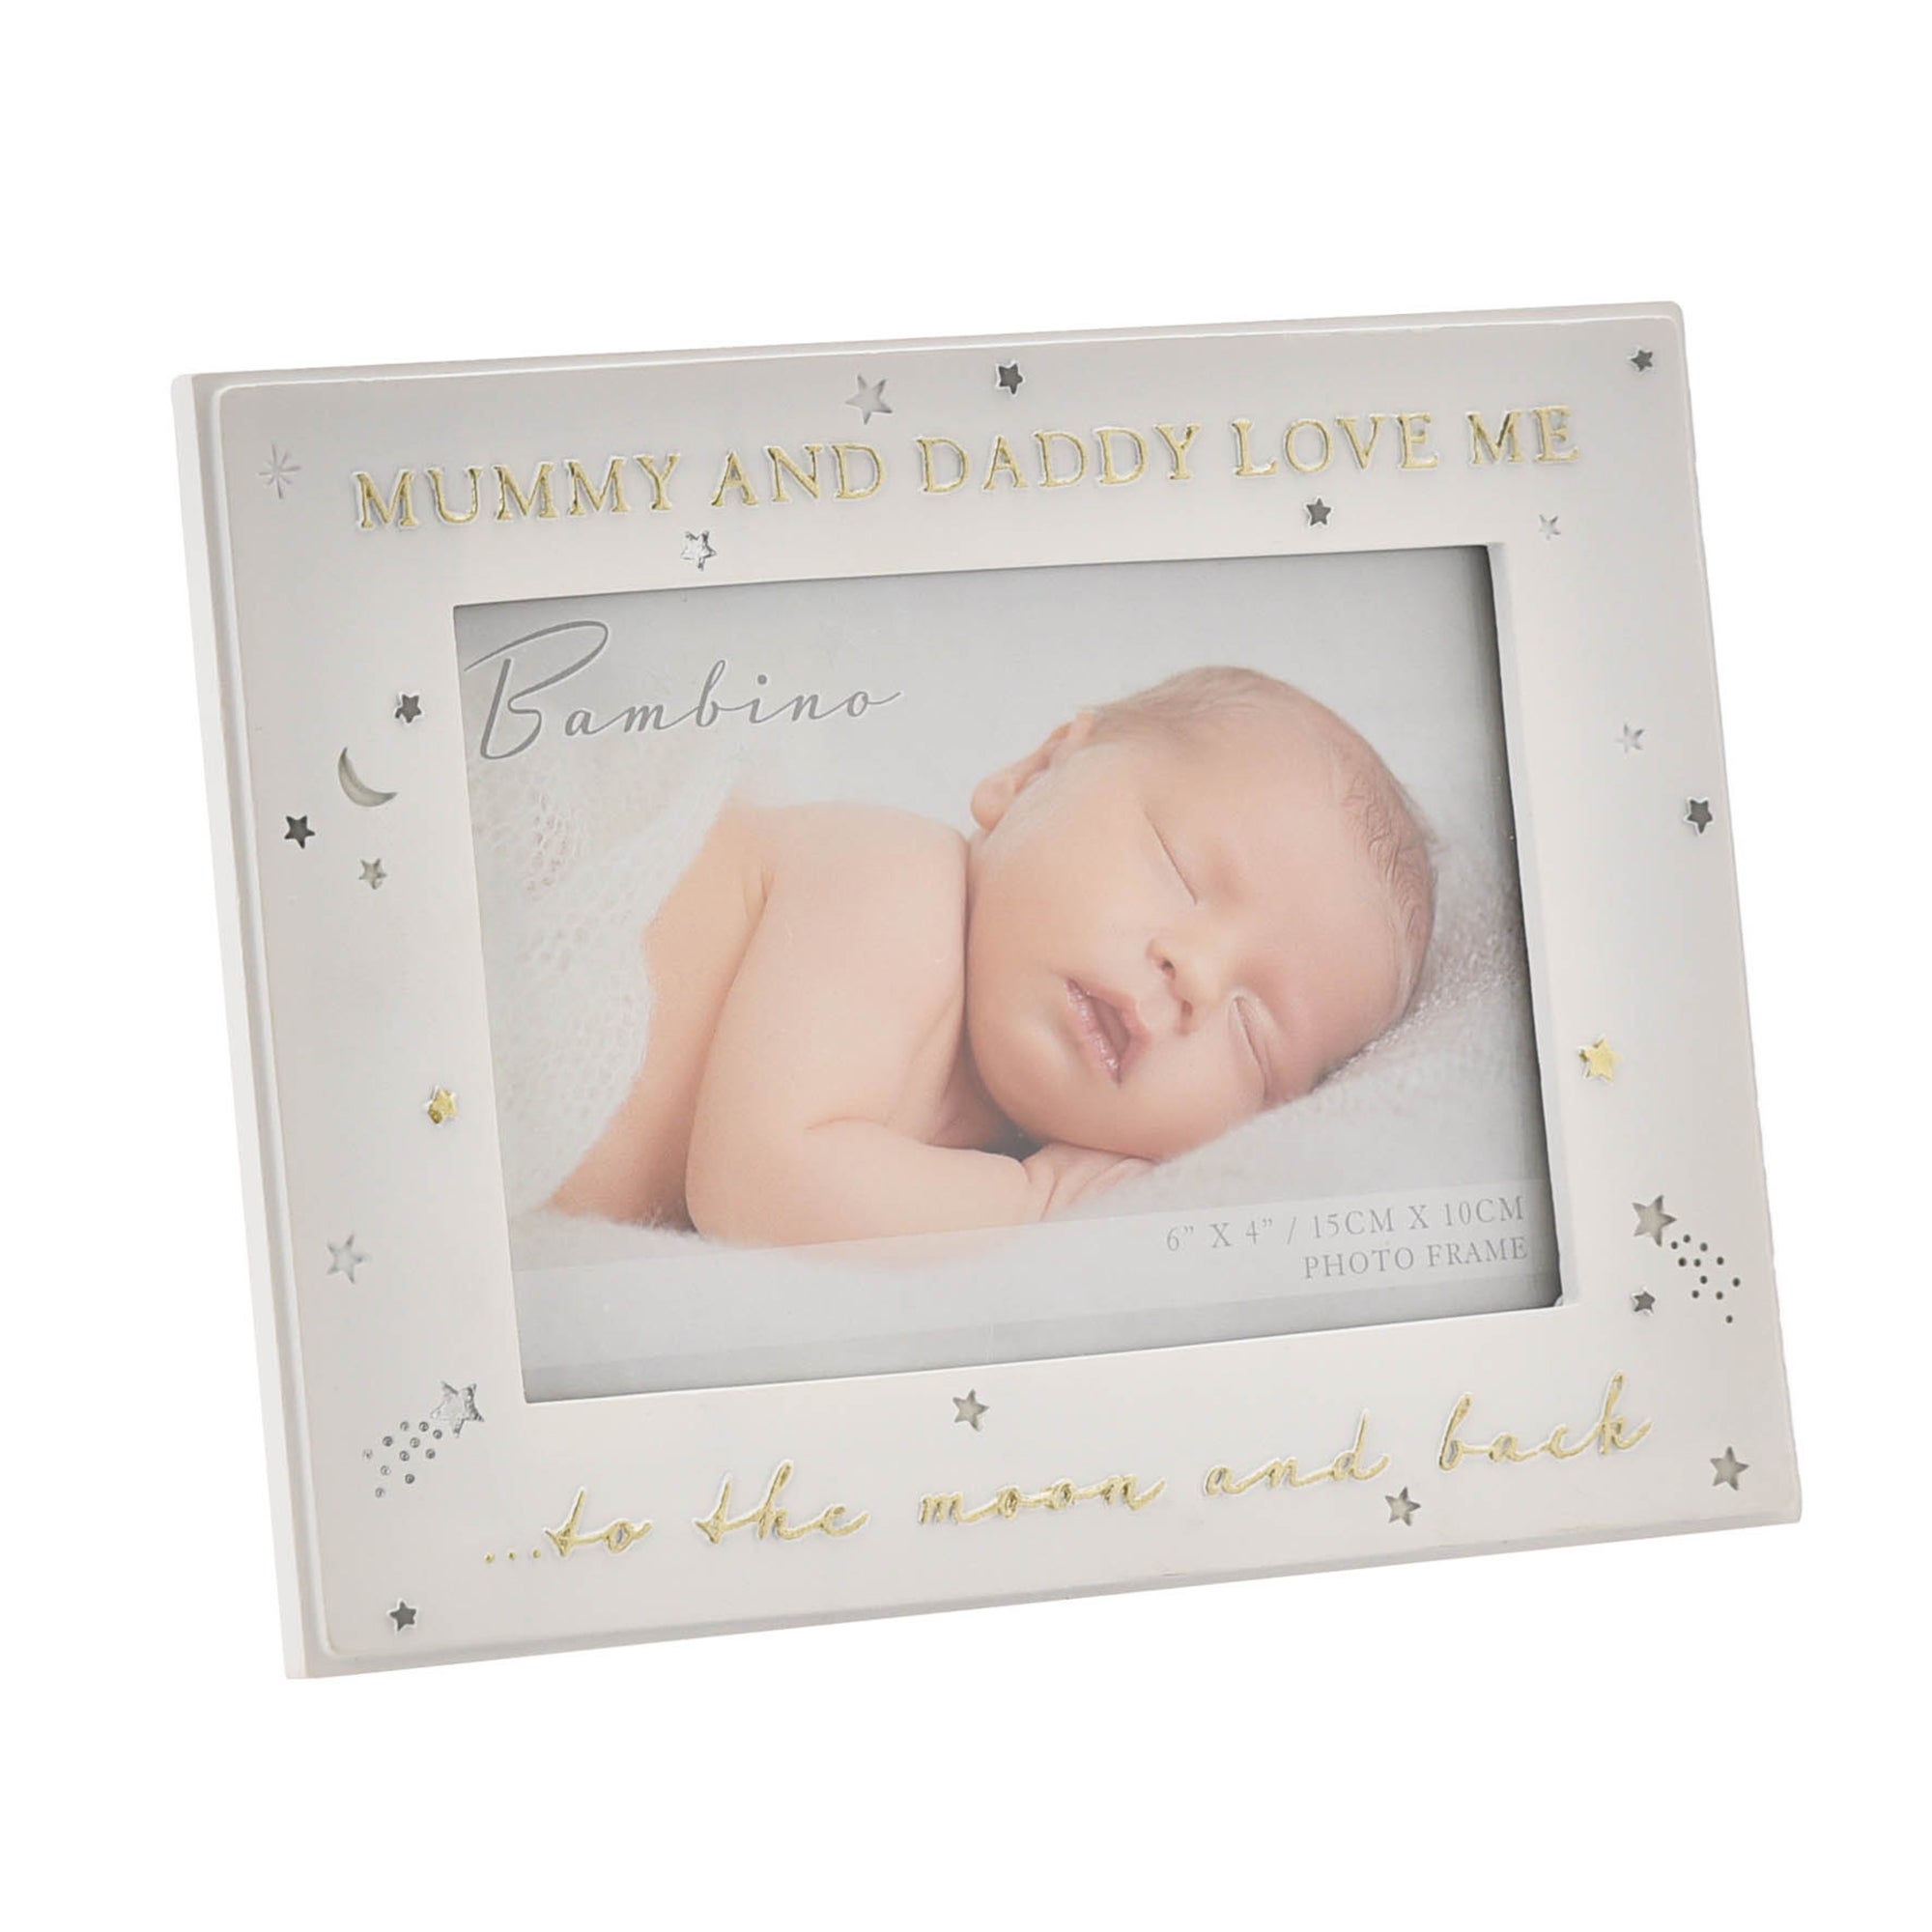 Photos - Photo Frame / Album Bambino Mummy & Daddy Love Me To The Moon & Back Photo Frame White 